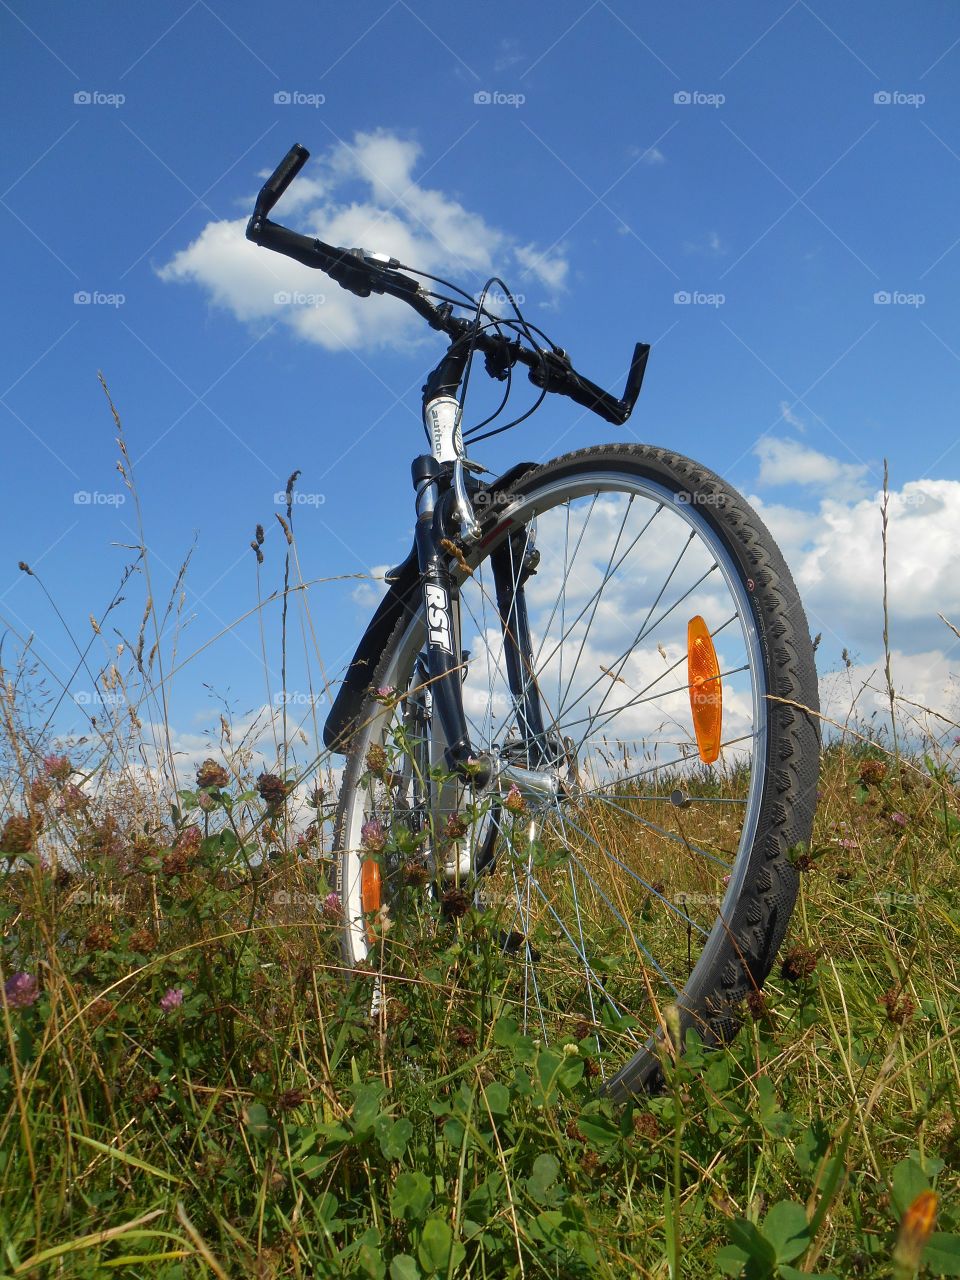 bike on a green grass blue sky background summer time